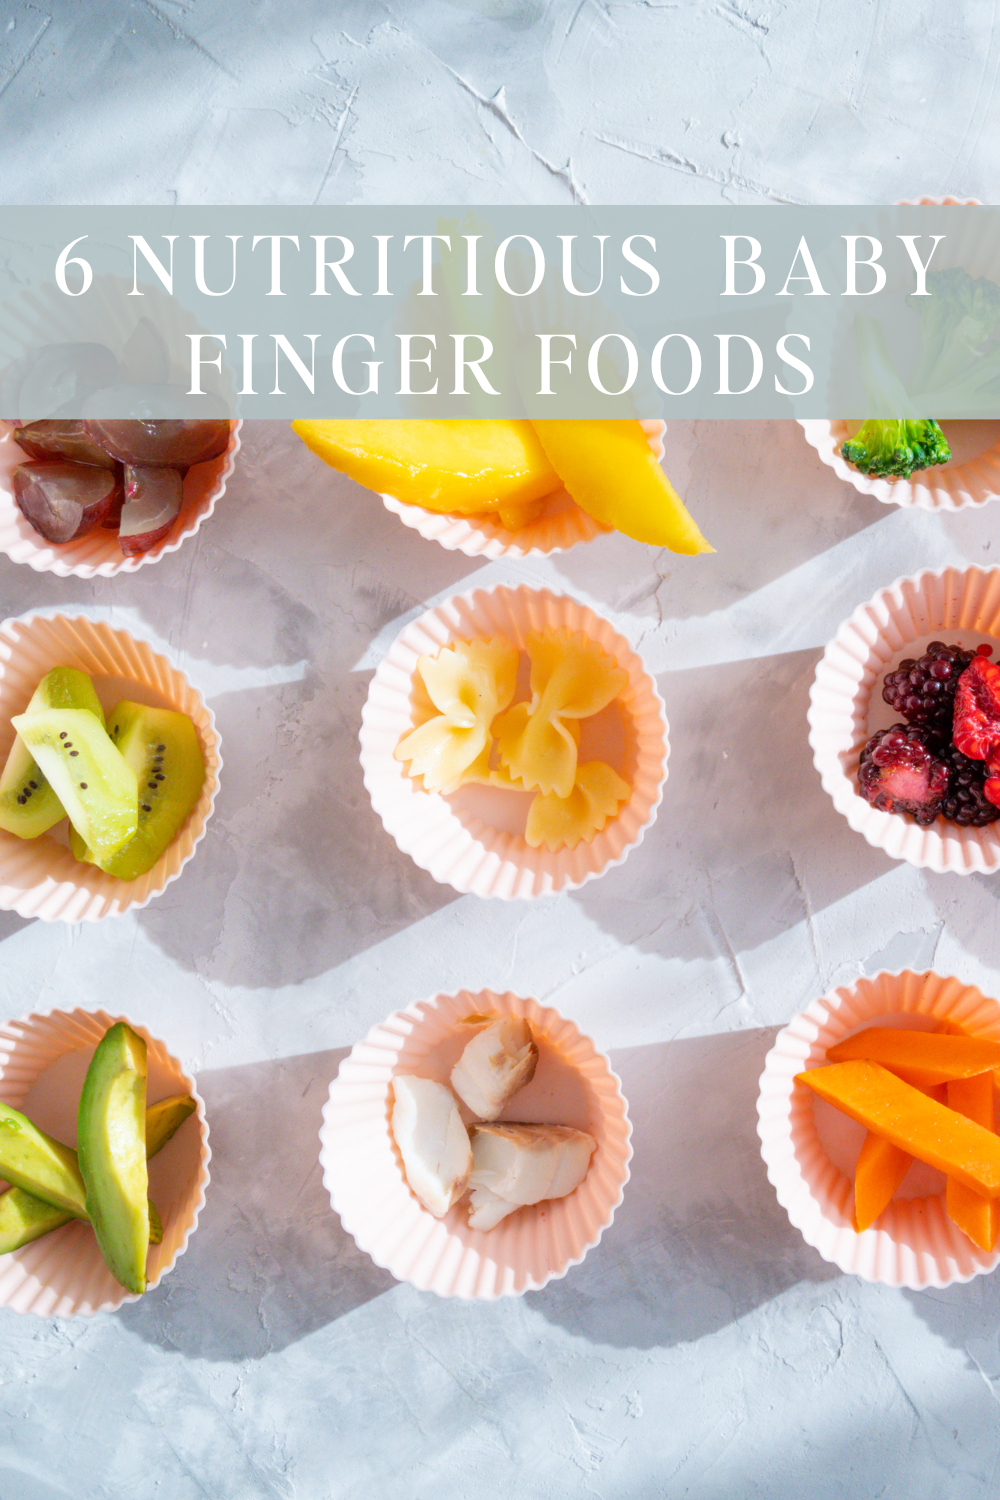 Finger Food for Baby, First Finger Foods, finger food recipes for babies 9 12 months